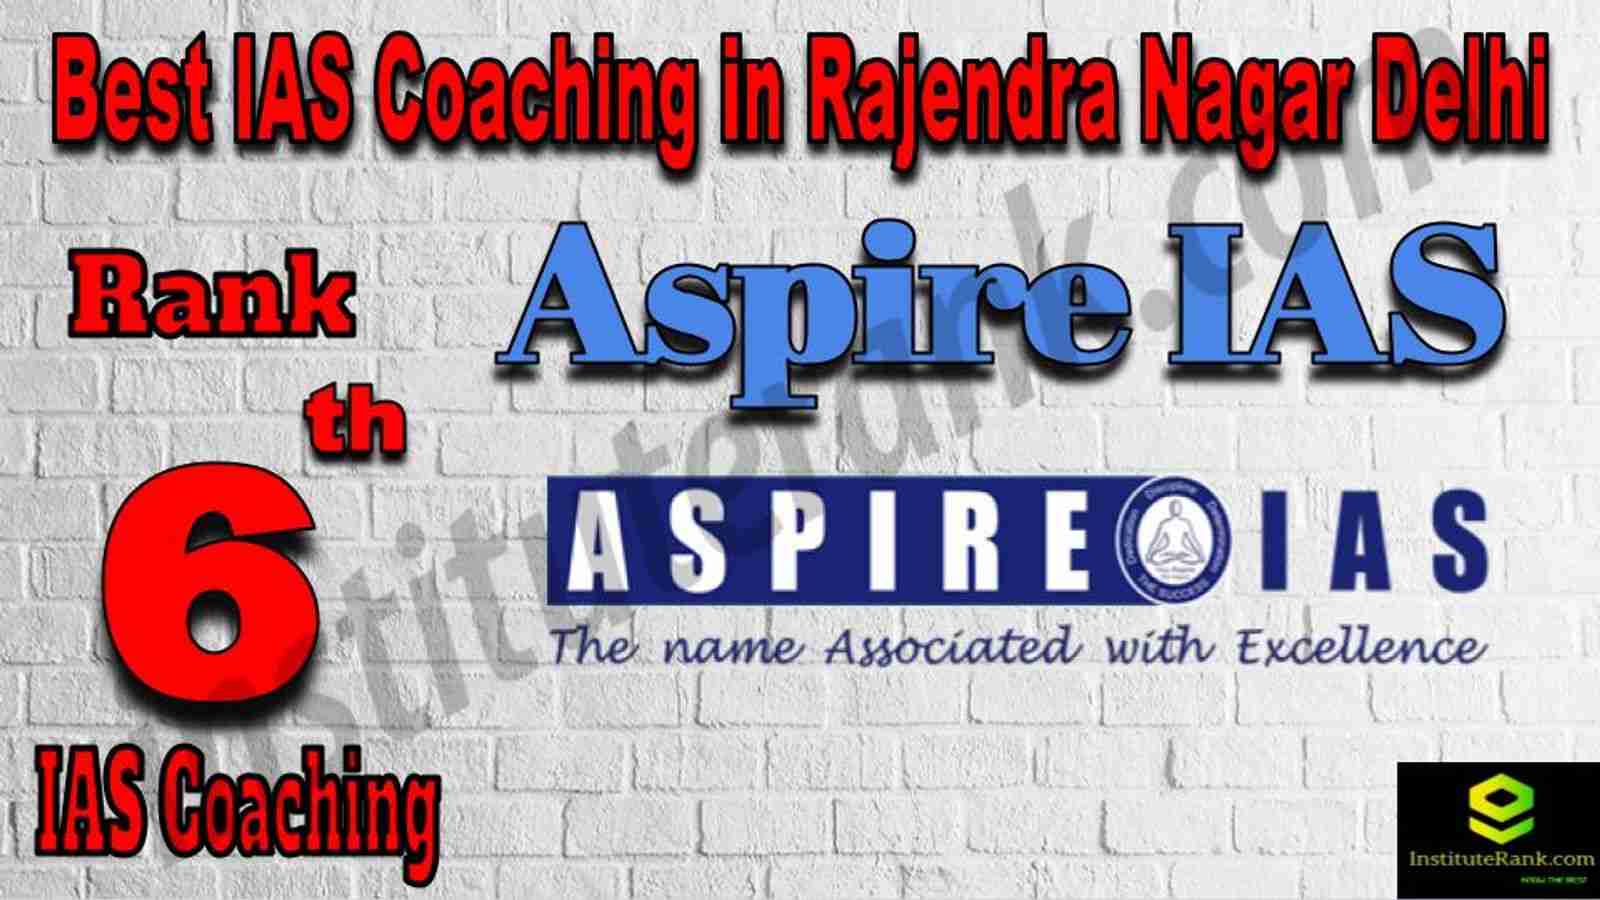 6th Best IAS Coaching in Rajendra Nagar